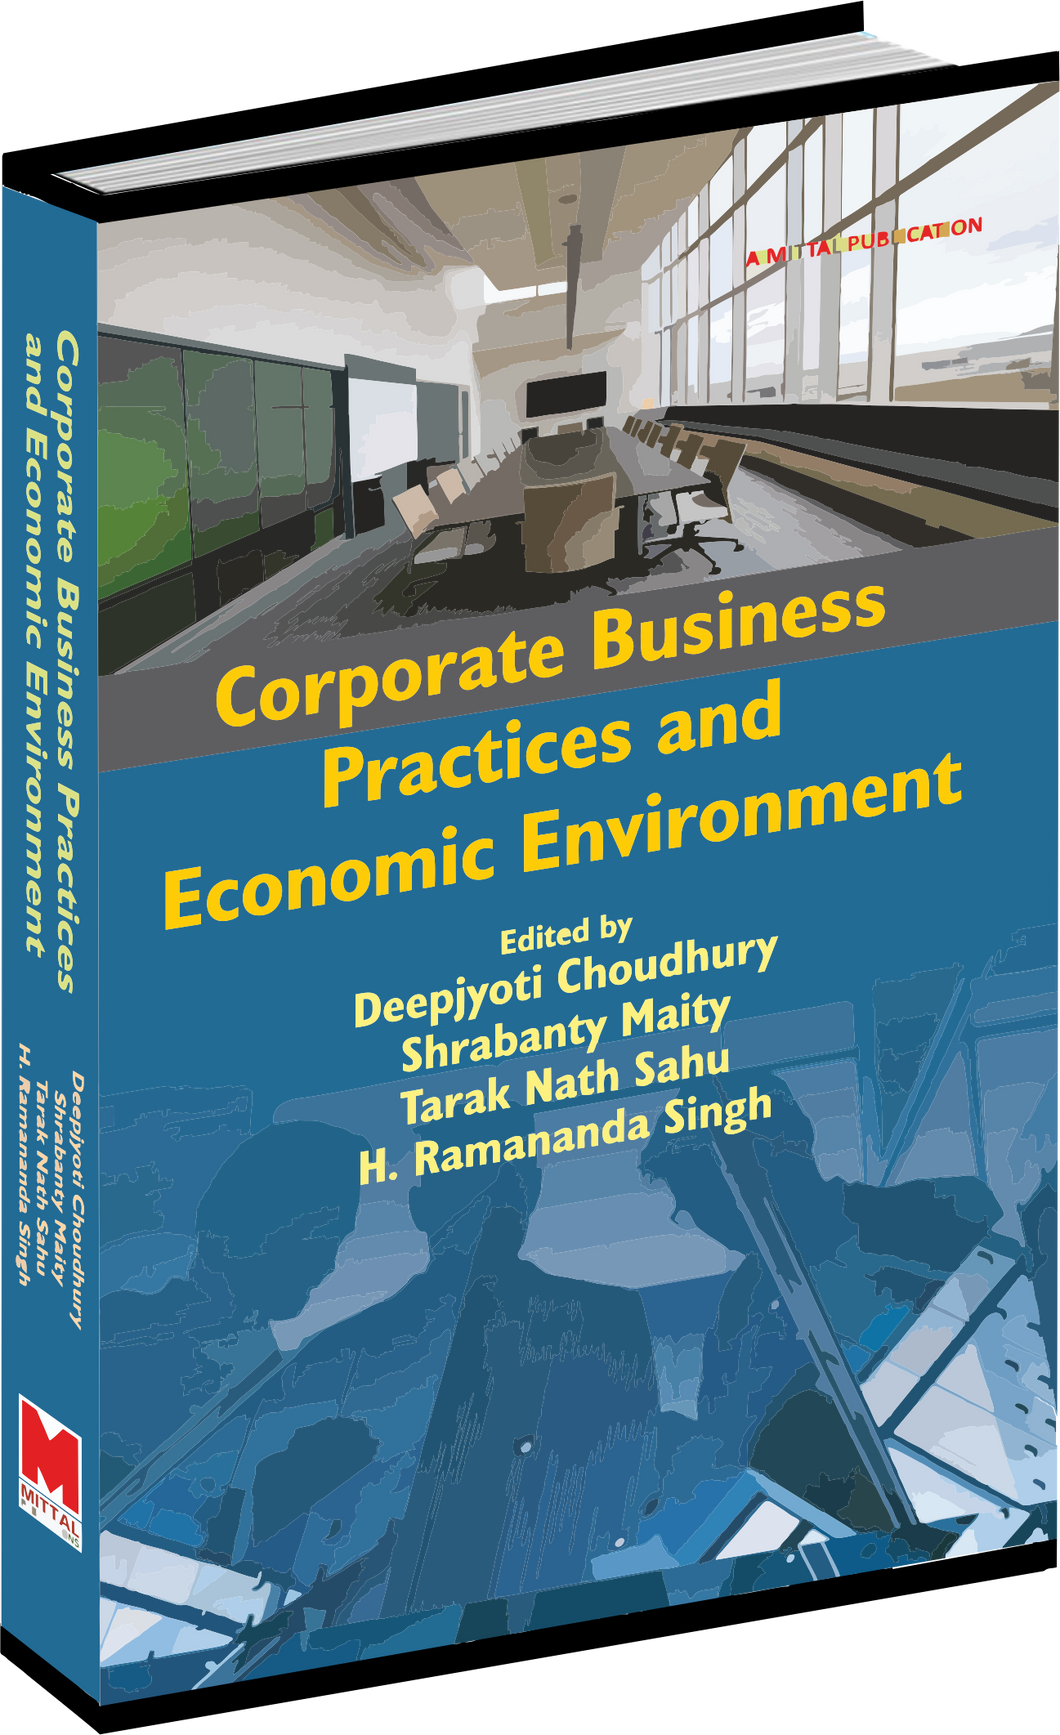 Corporate  Business Practices and Economic Environment edited by Dr. Deepjyoti Choudhury, Dr. Shrabanti Maity, Dr. Tarak Nath Sahu and Prof. H. Ramananda Singh